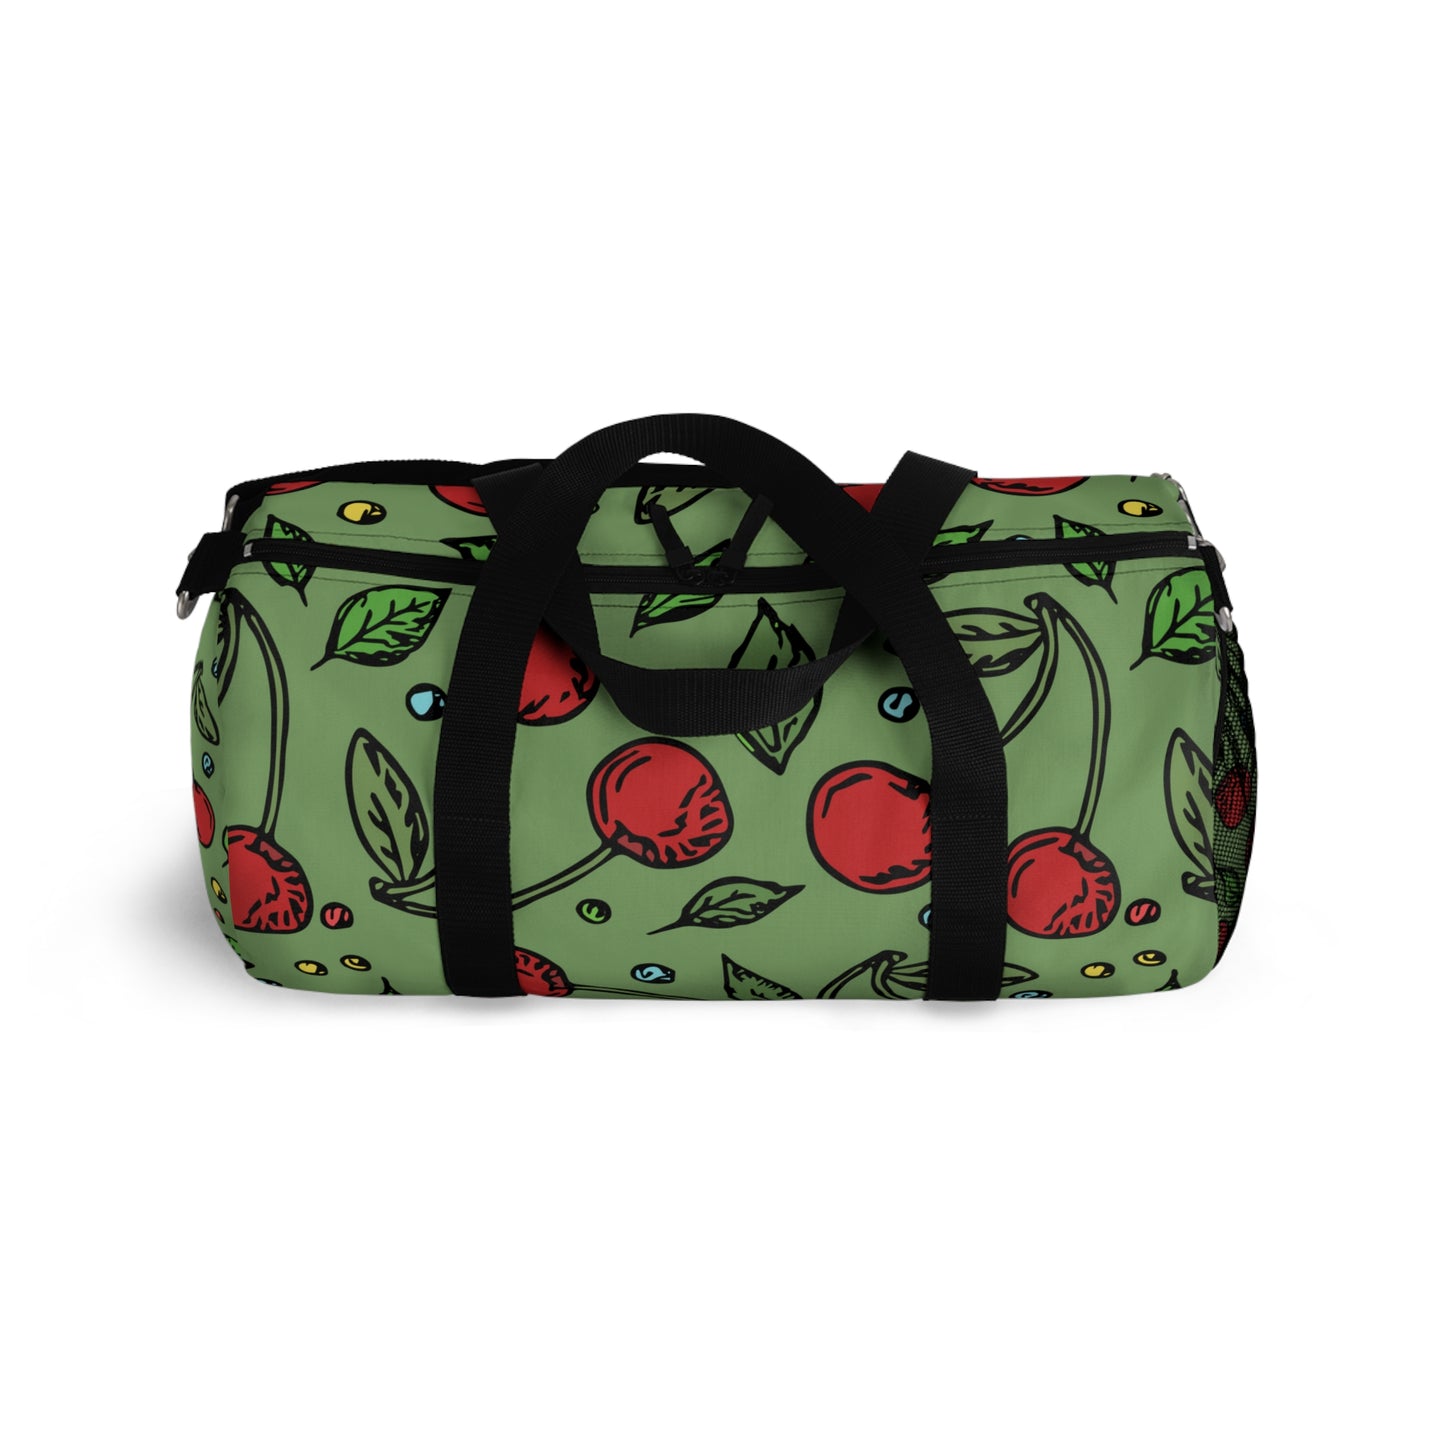 The Ultimate Cherry Duffel Bag